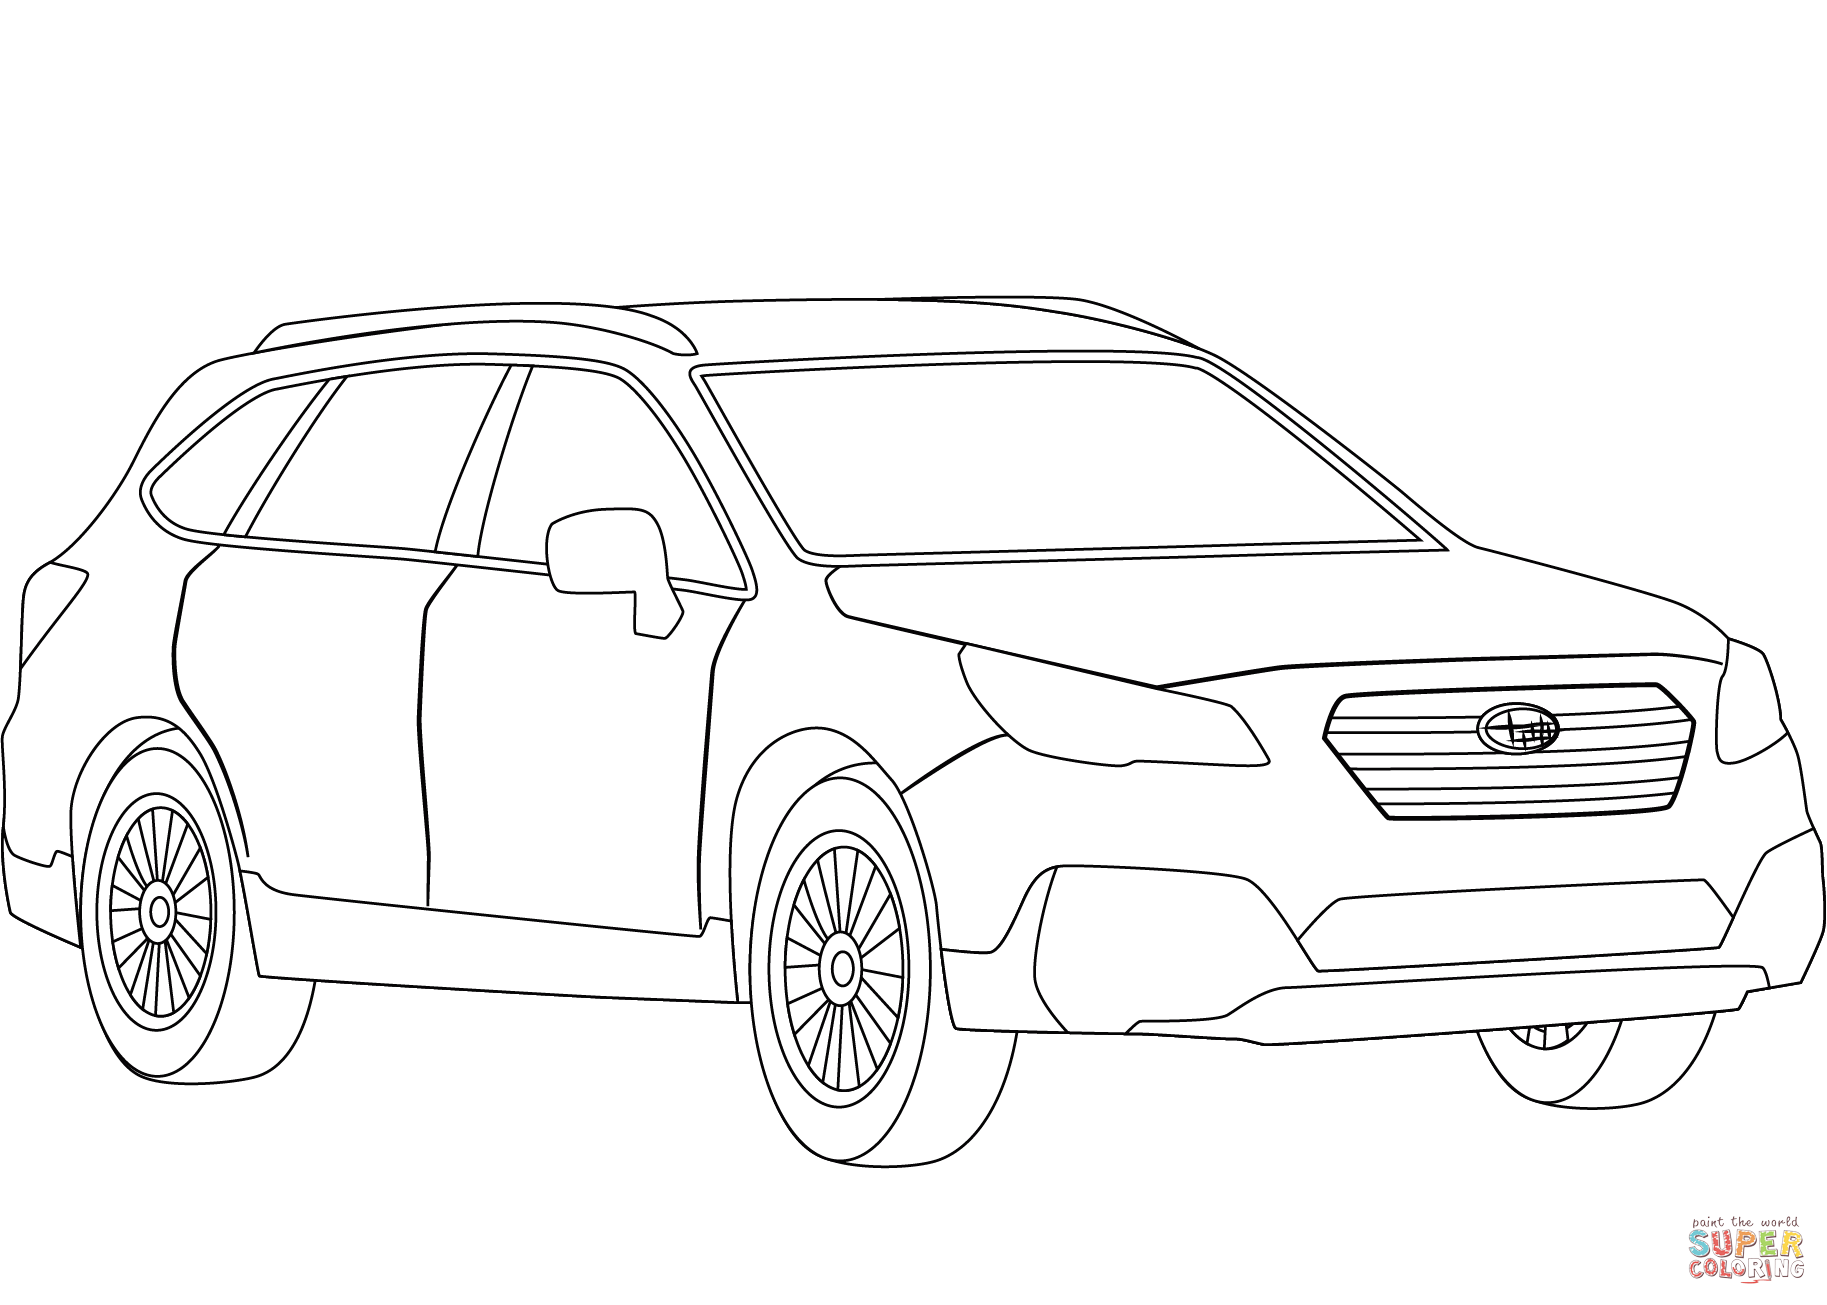 Subaru Logo Coloring Page Coloring Pages